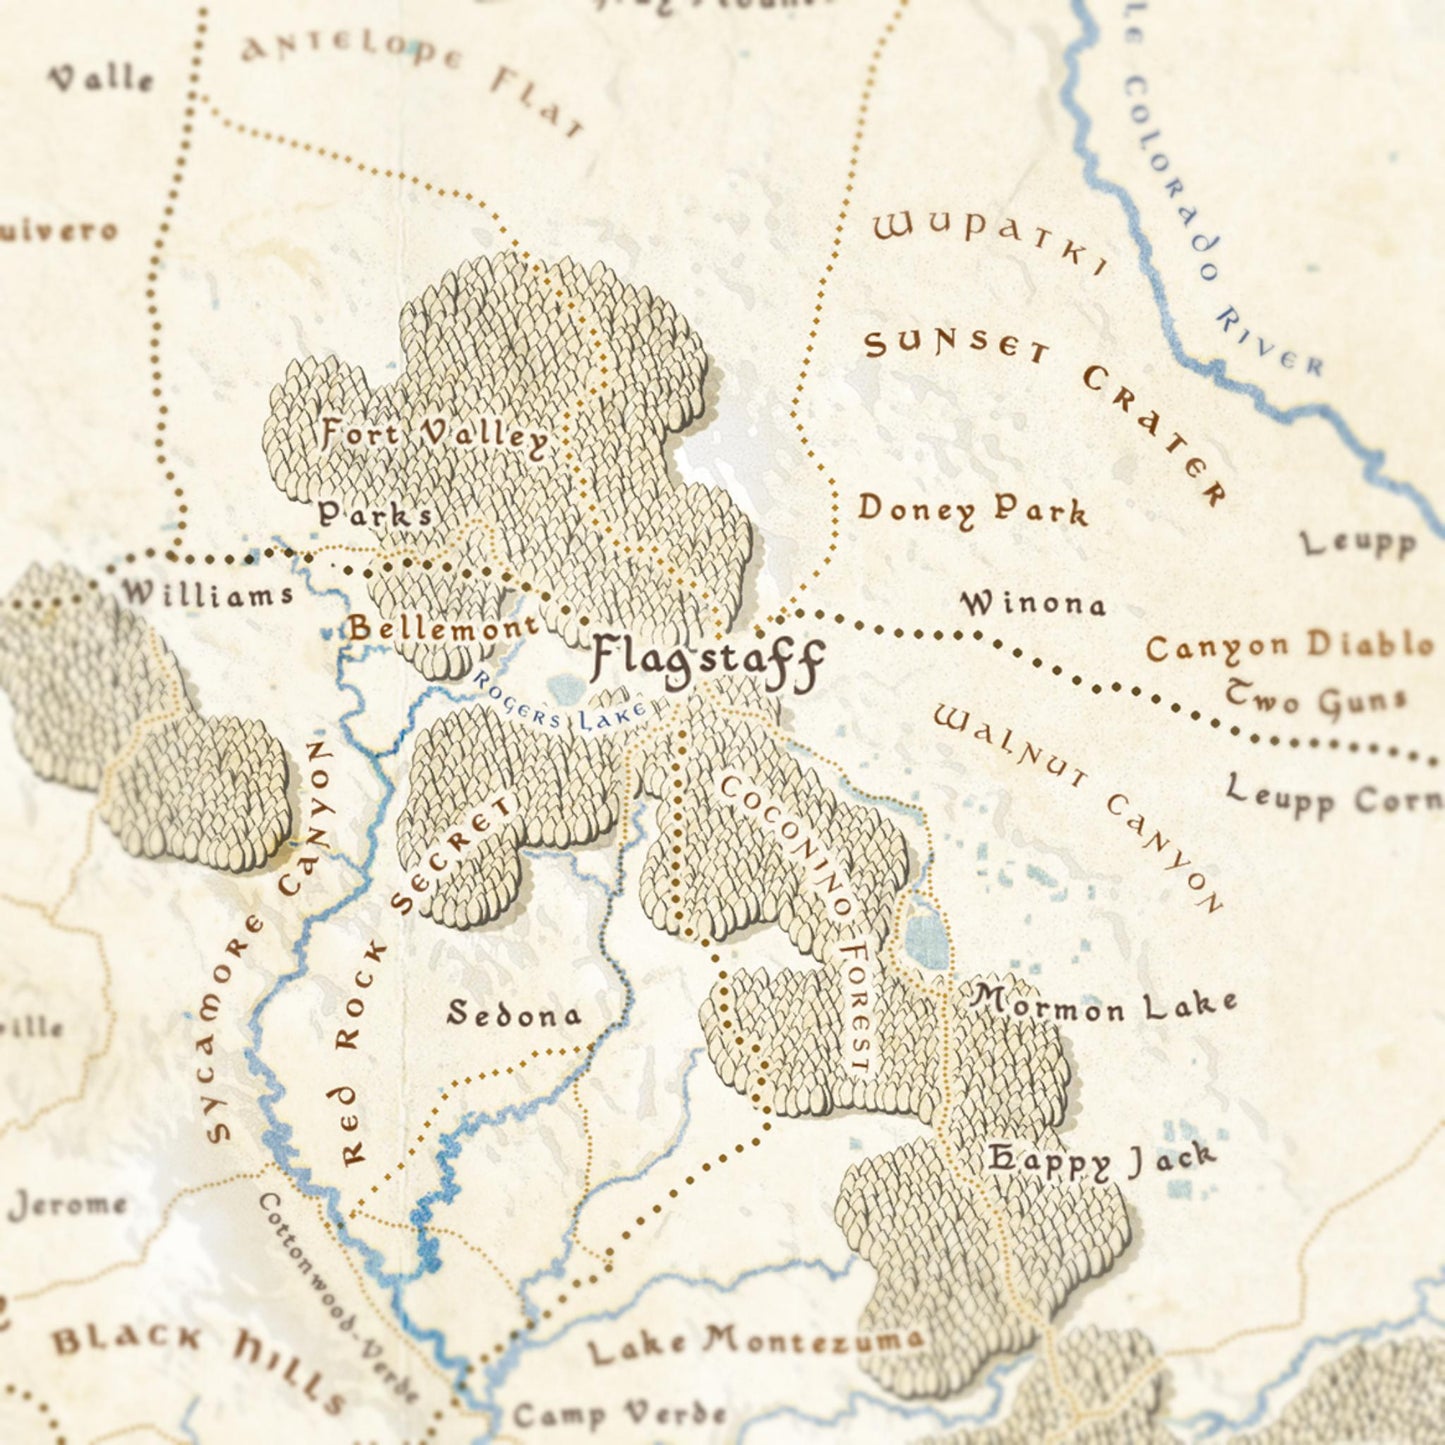 Arizona Fantasy Map Print